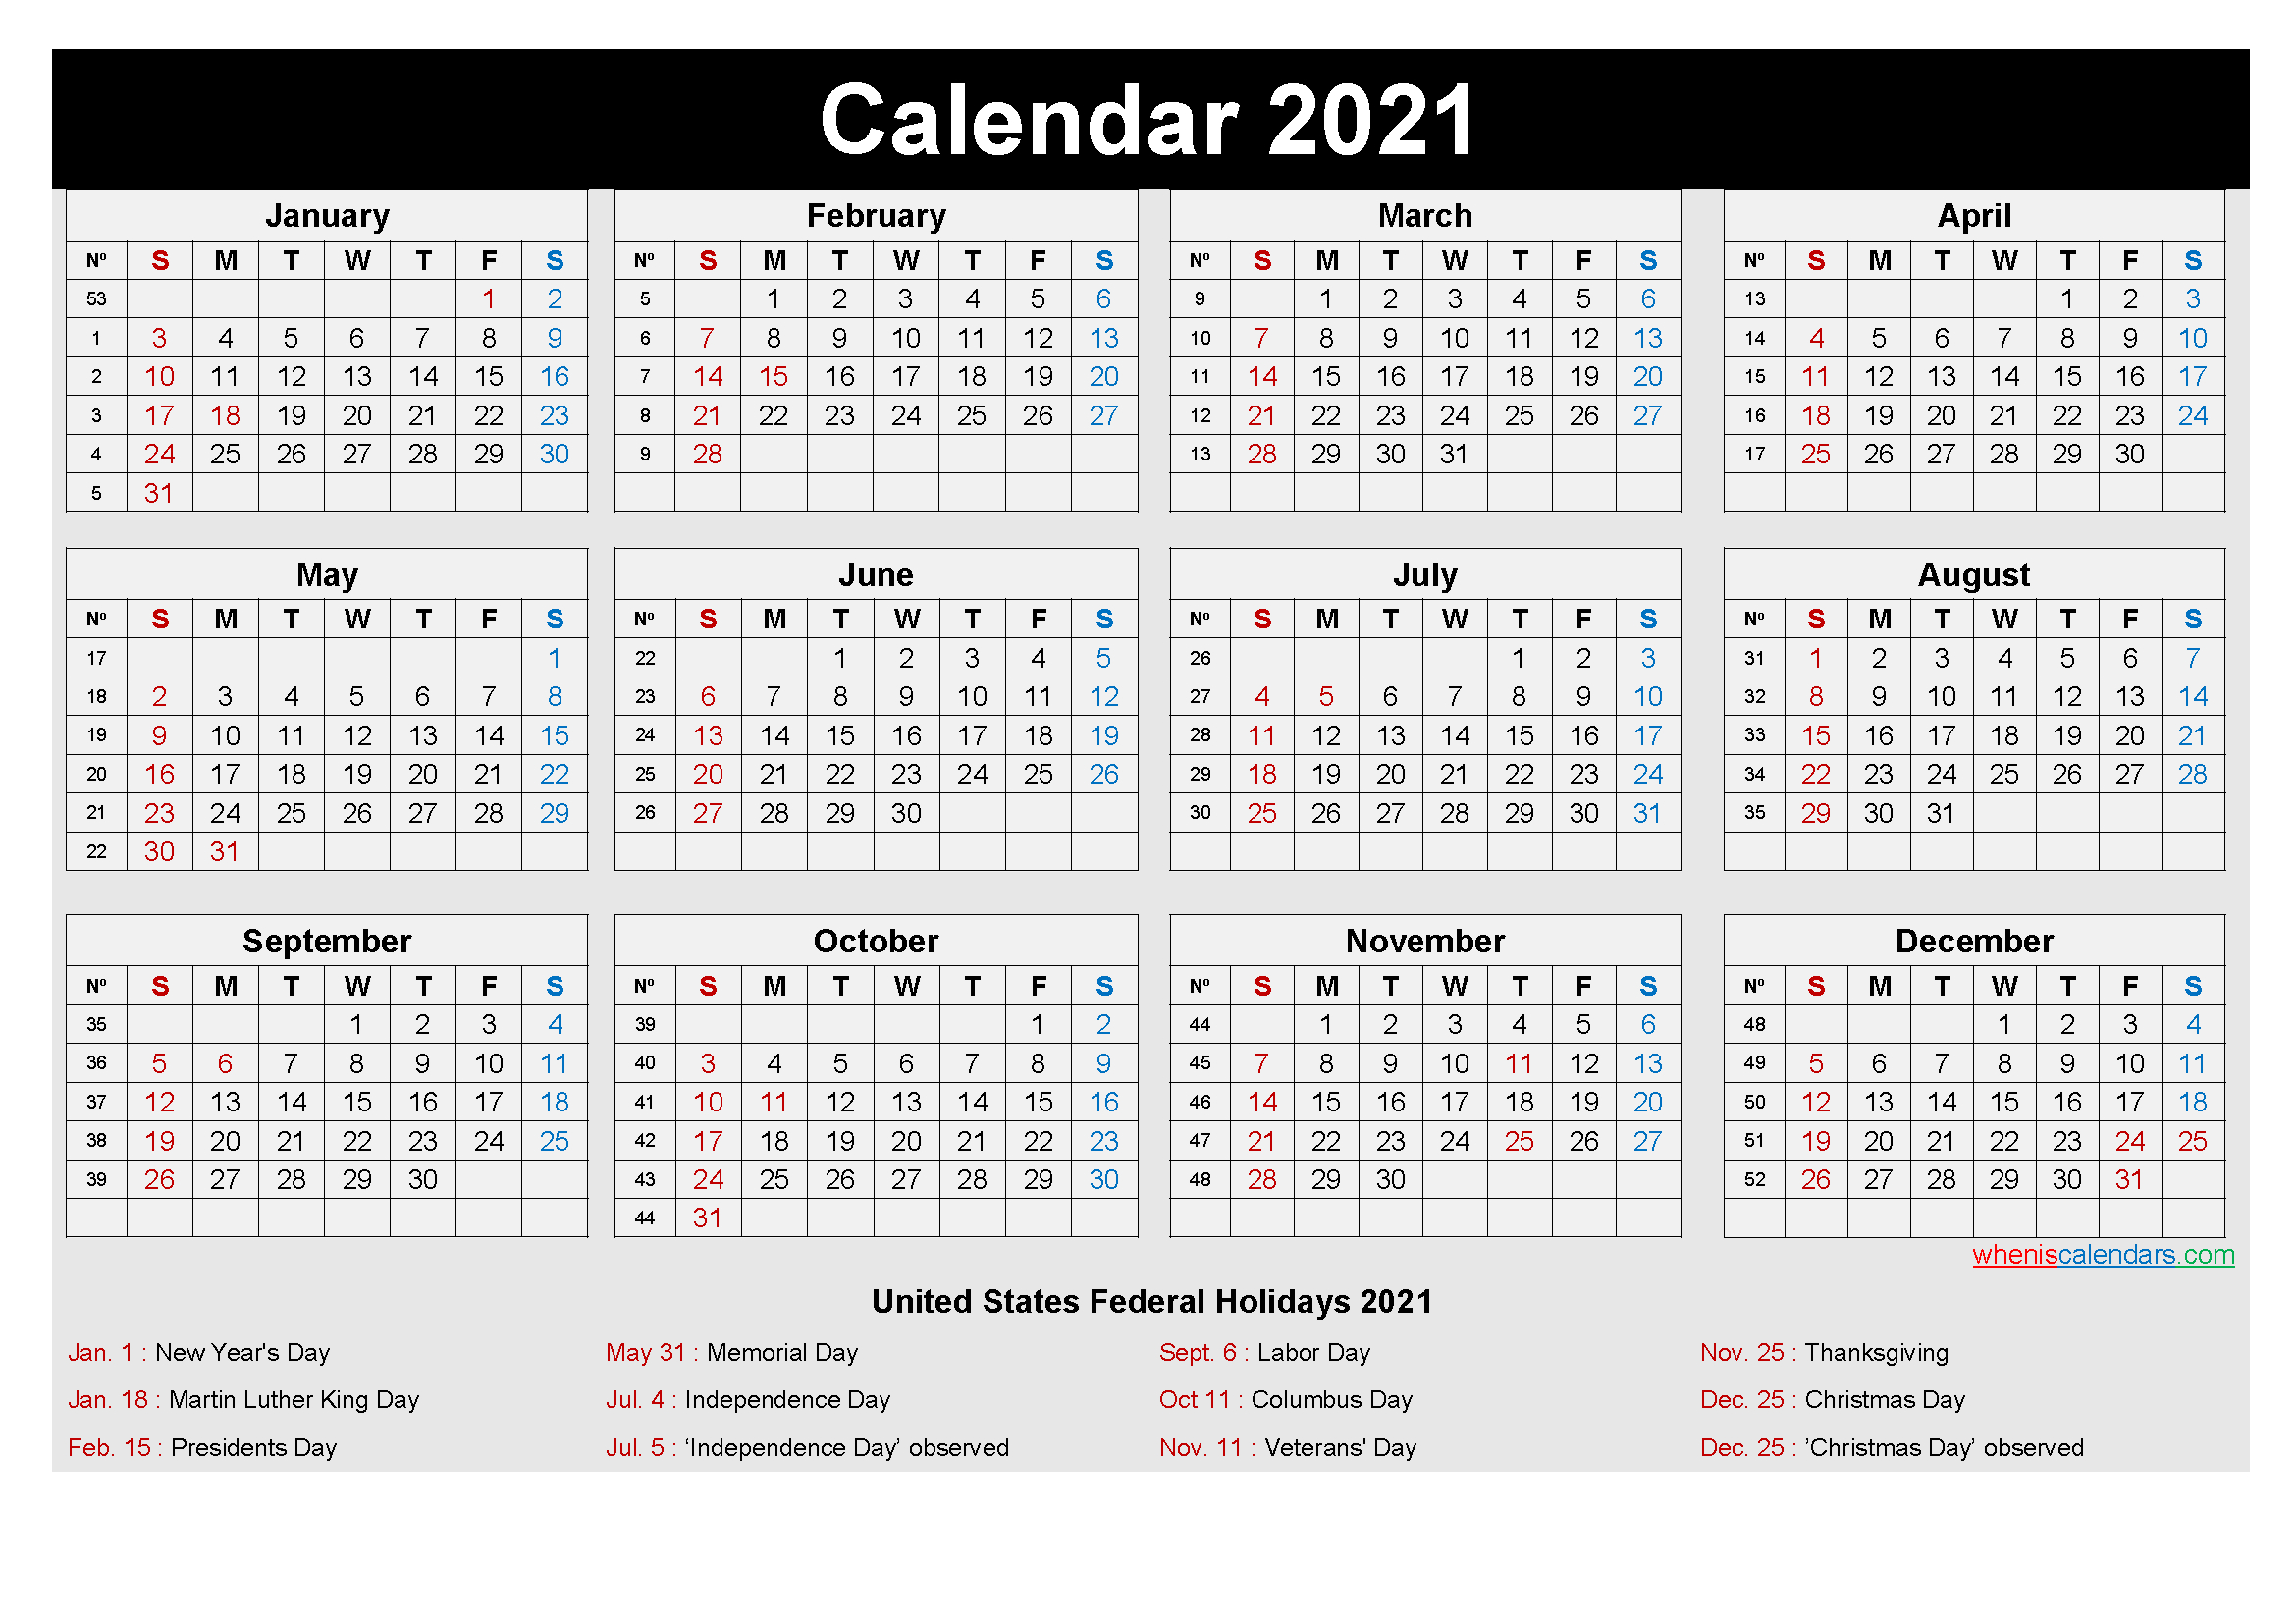 Large Desk Calendar 2021 With Holidays